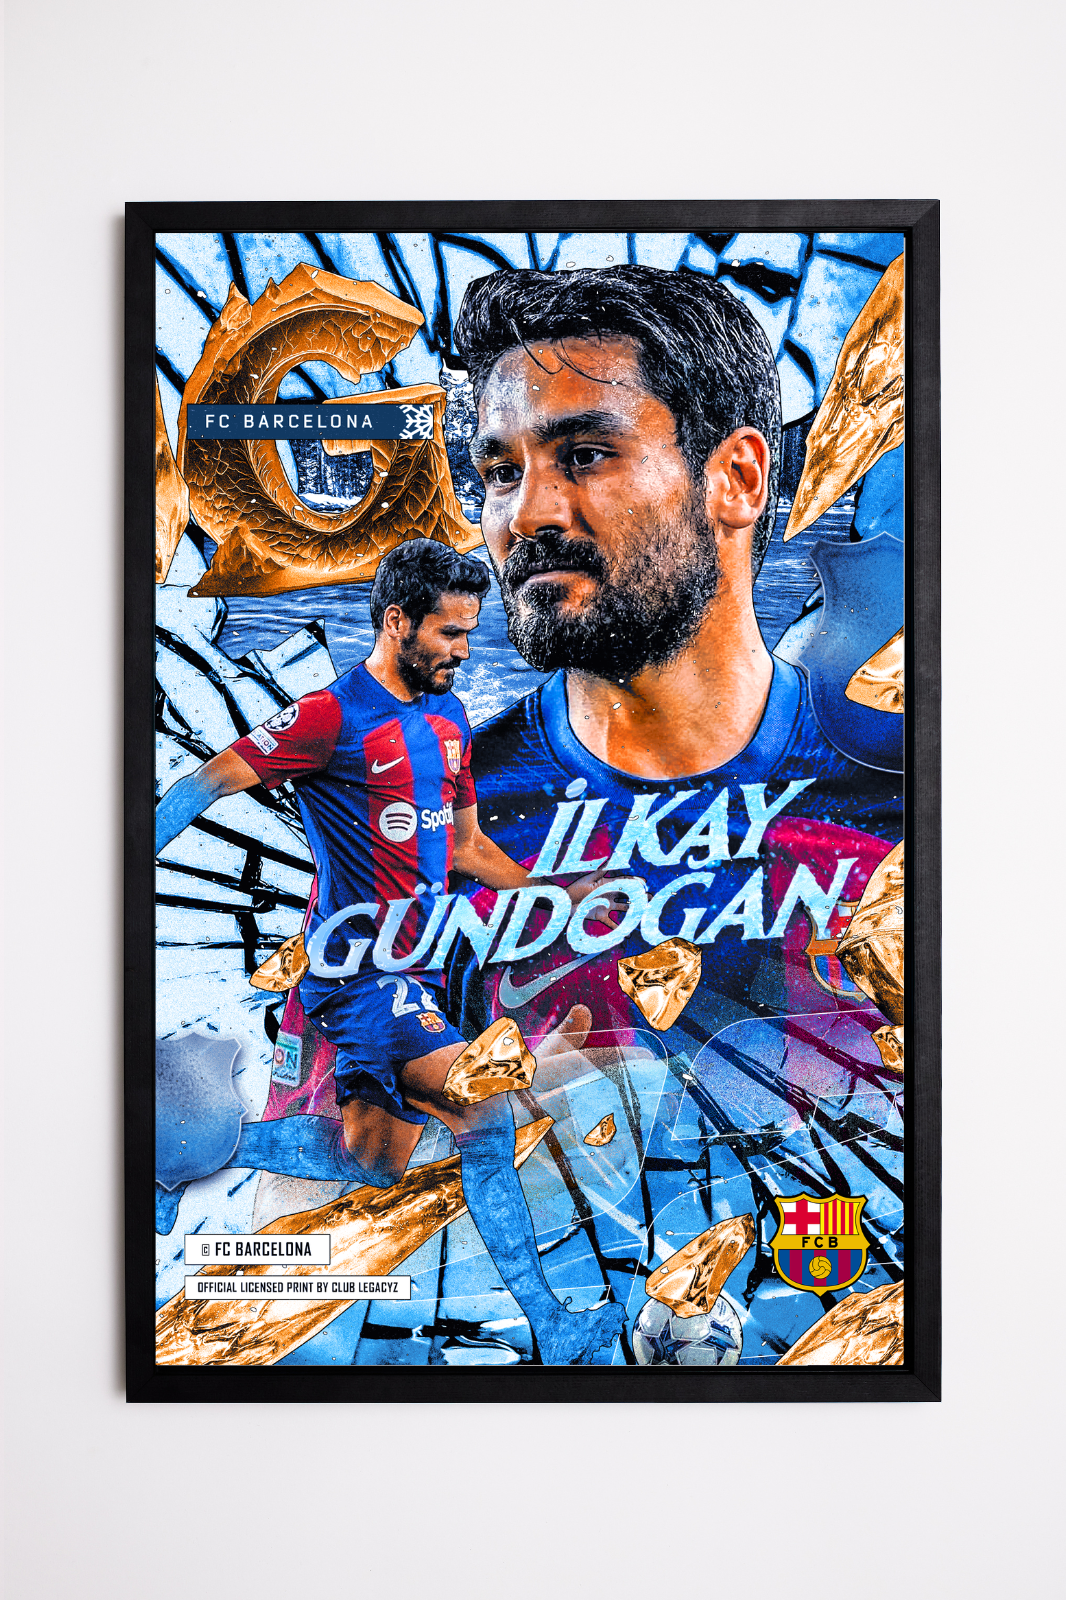 FC Barcelona - Poster Frozen İlkay Gündogan Frozen 100 exemplaires